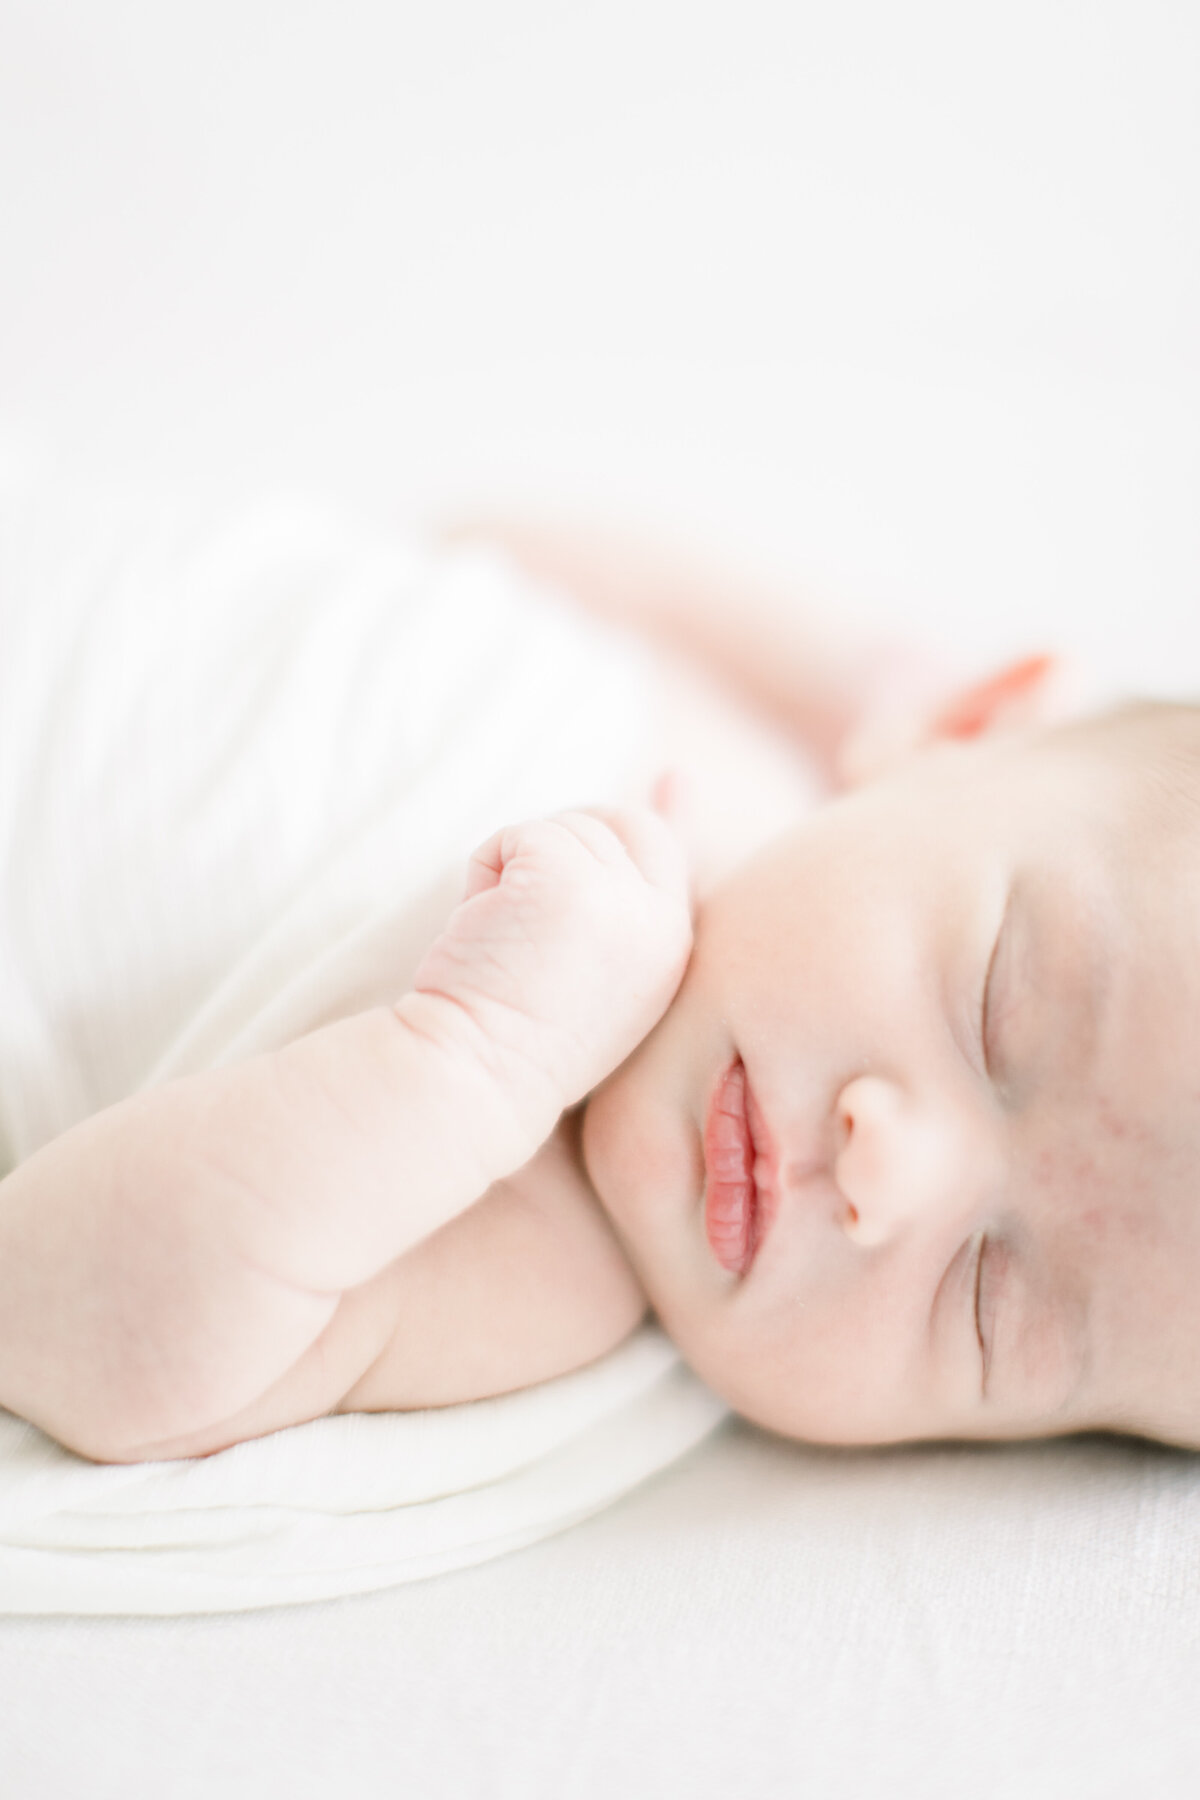 Baby Hannah  Crawford Newborn-259